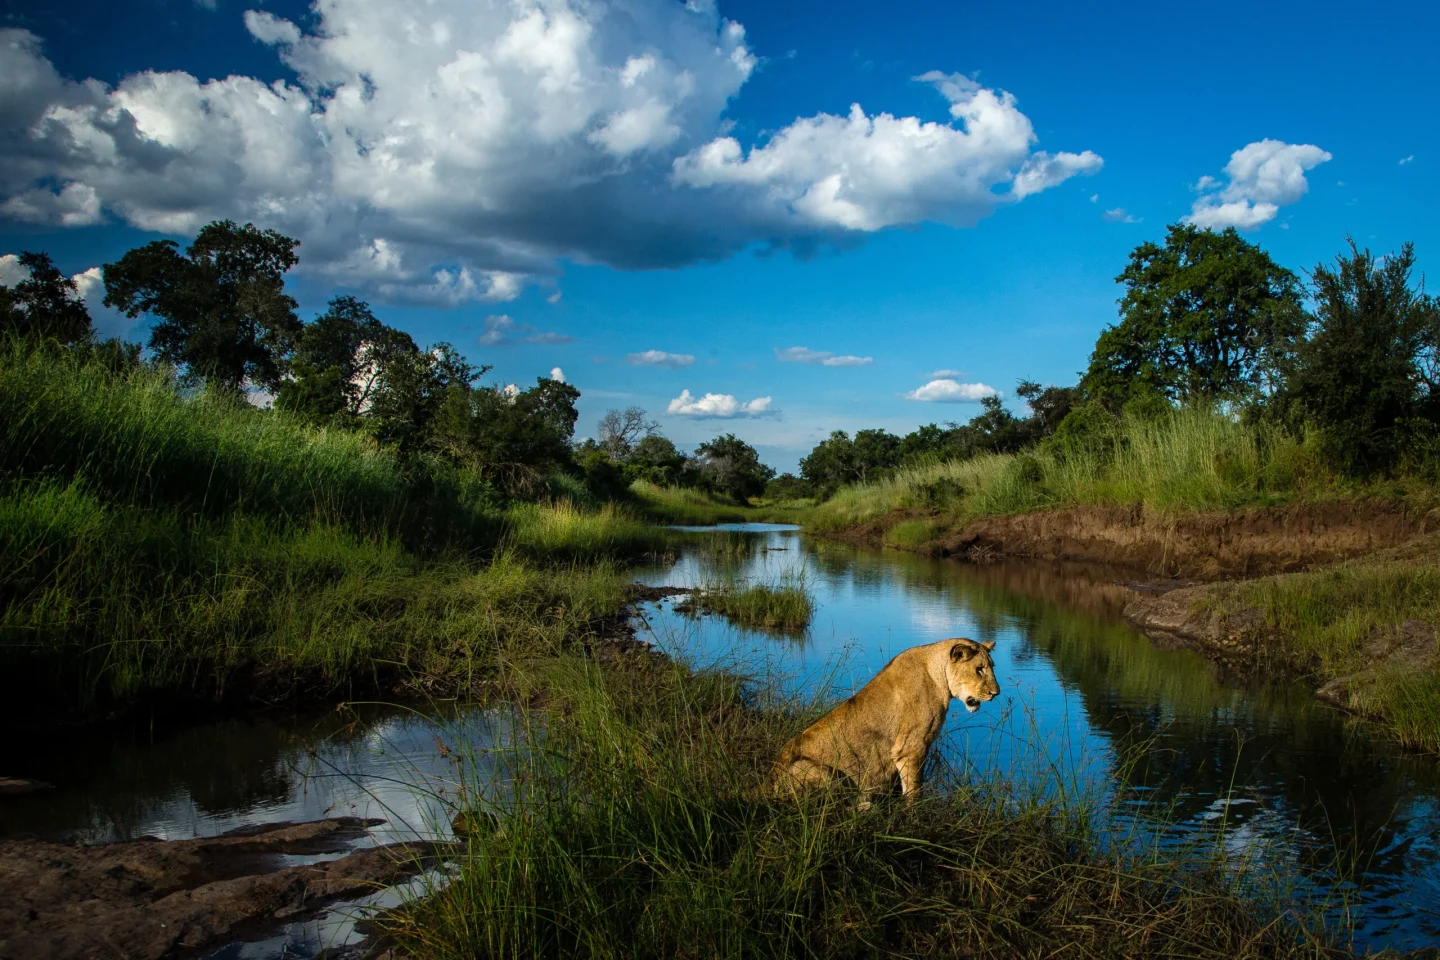 A lioness perches along the Zambezi River.